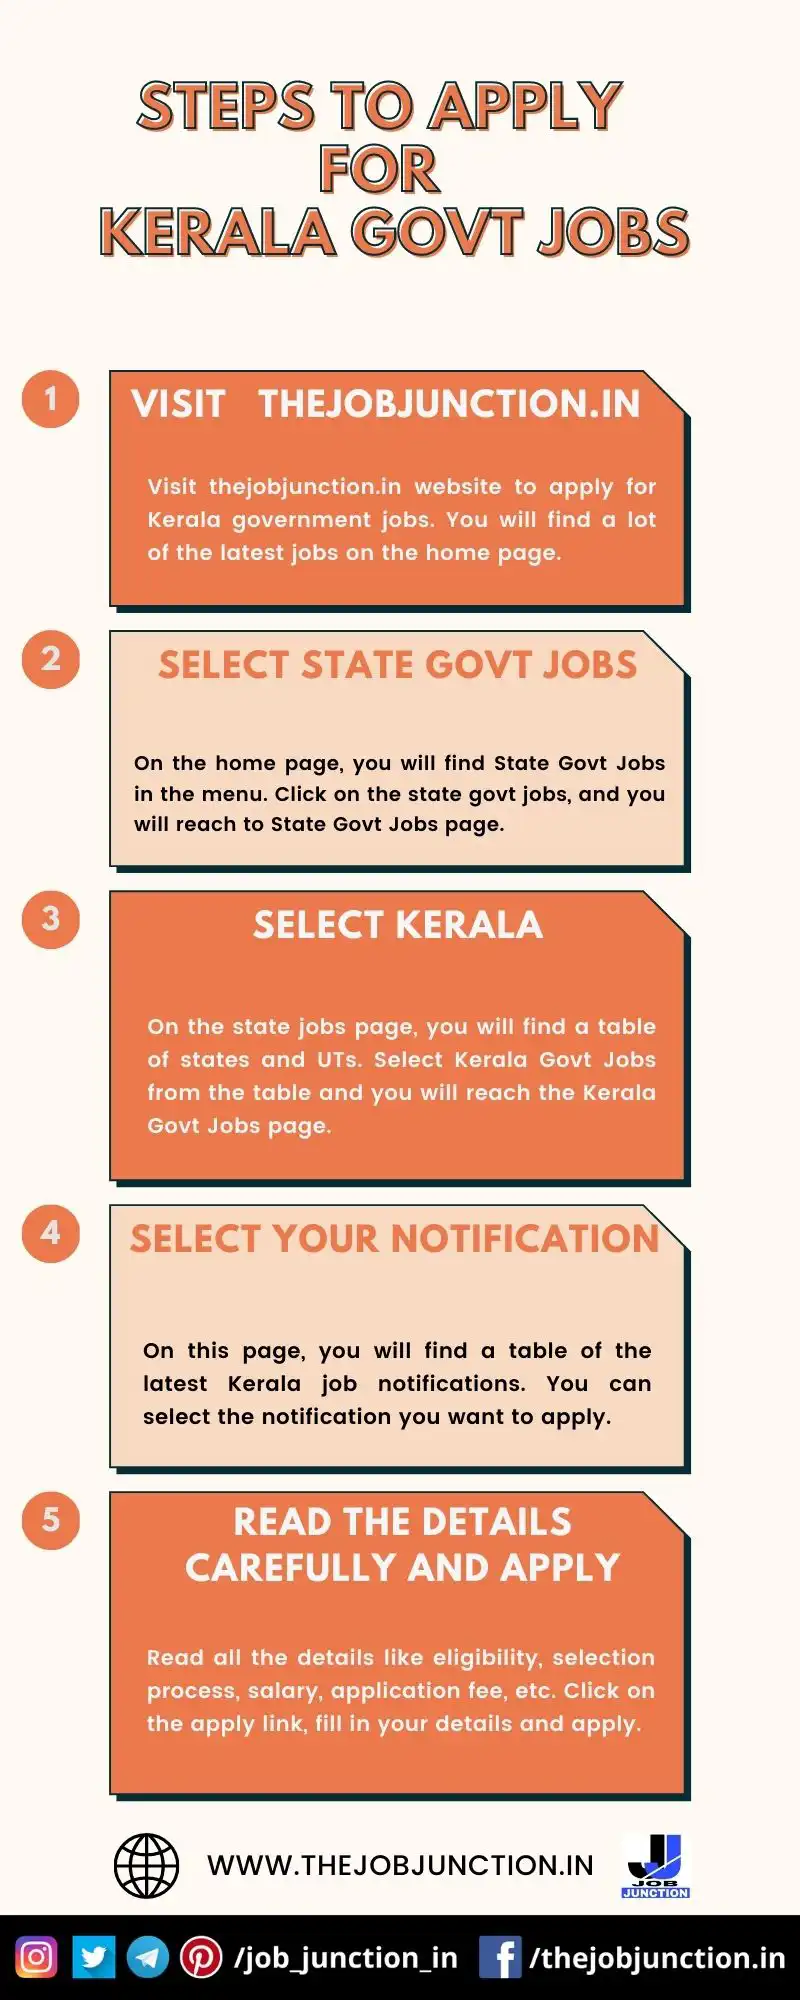 STEPS TO APPLY FOR KERALA GOVT JOBS